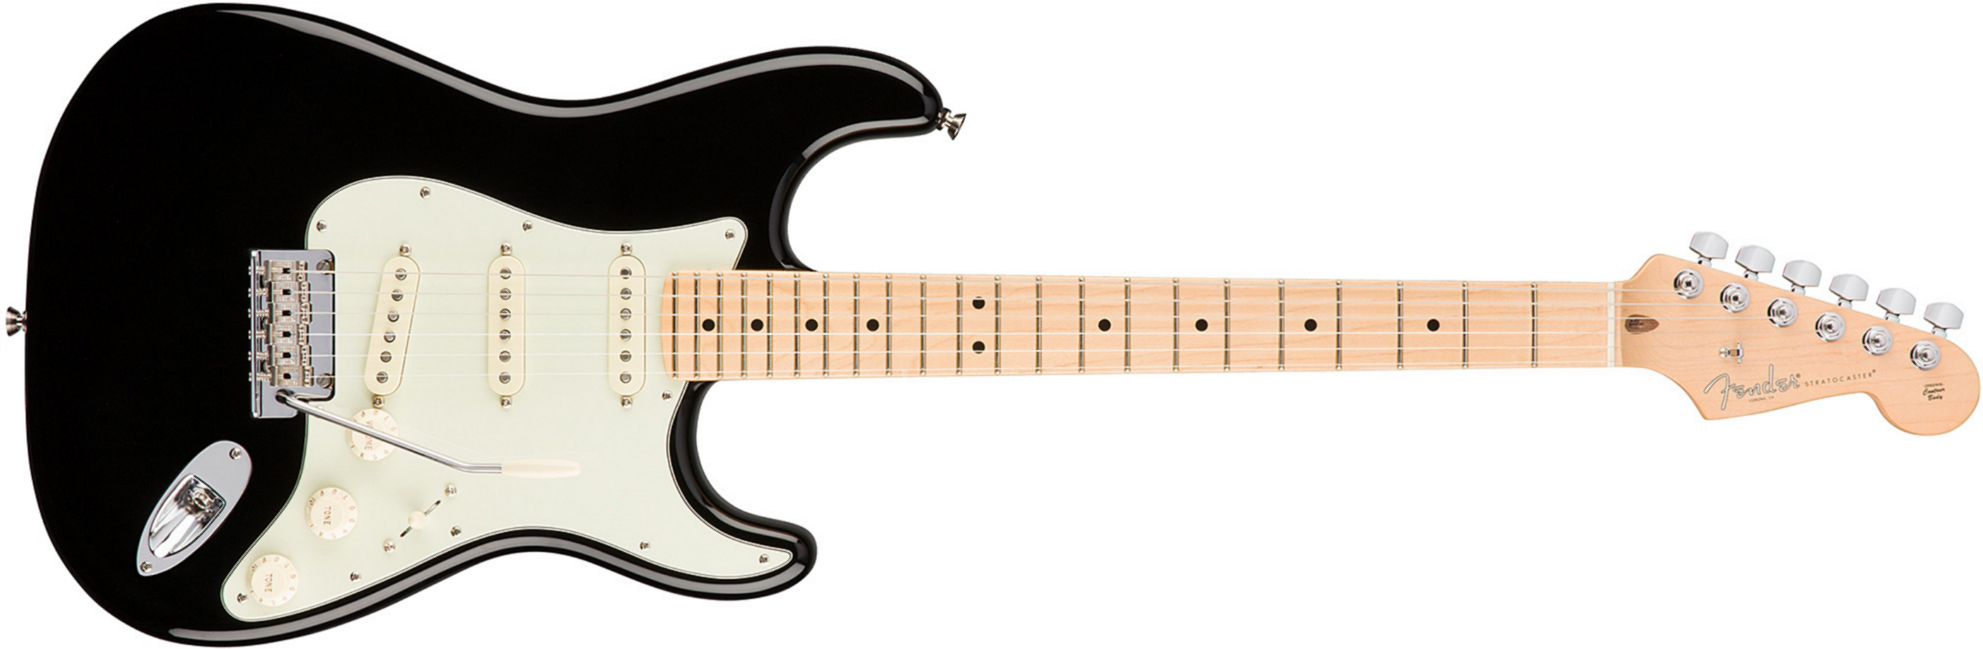 Fender Strat American Professional 2017 3s Usa Mn - Black - Guitarra eléctrica con forma de str. - Main picture